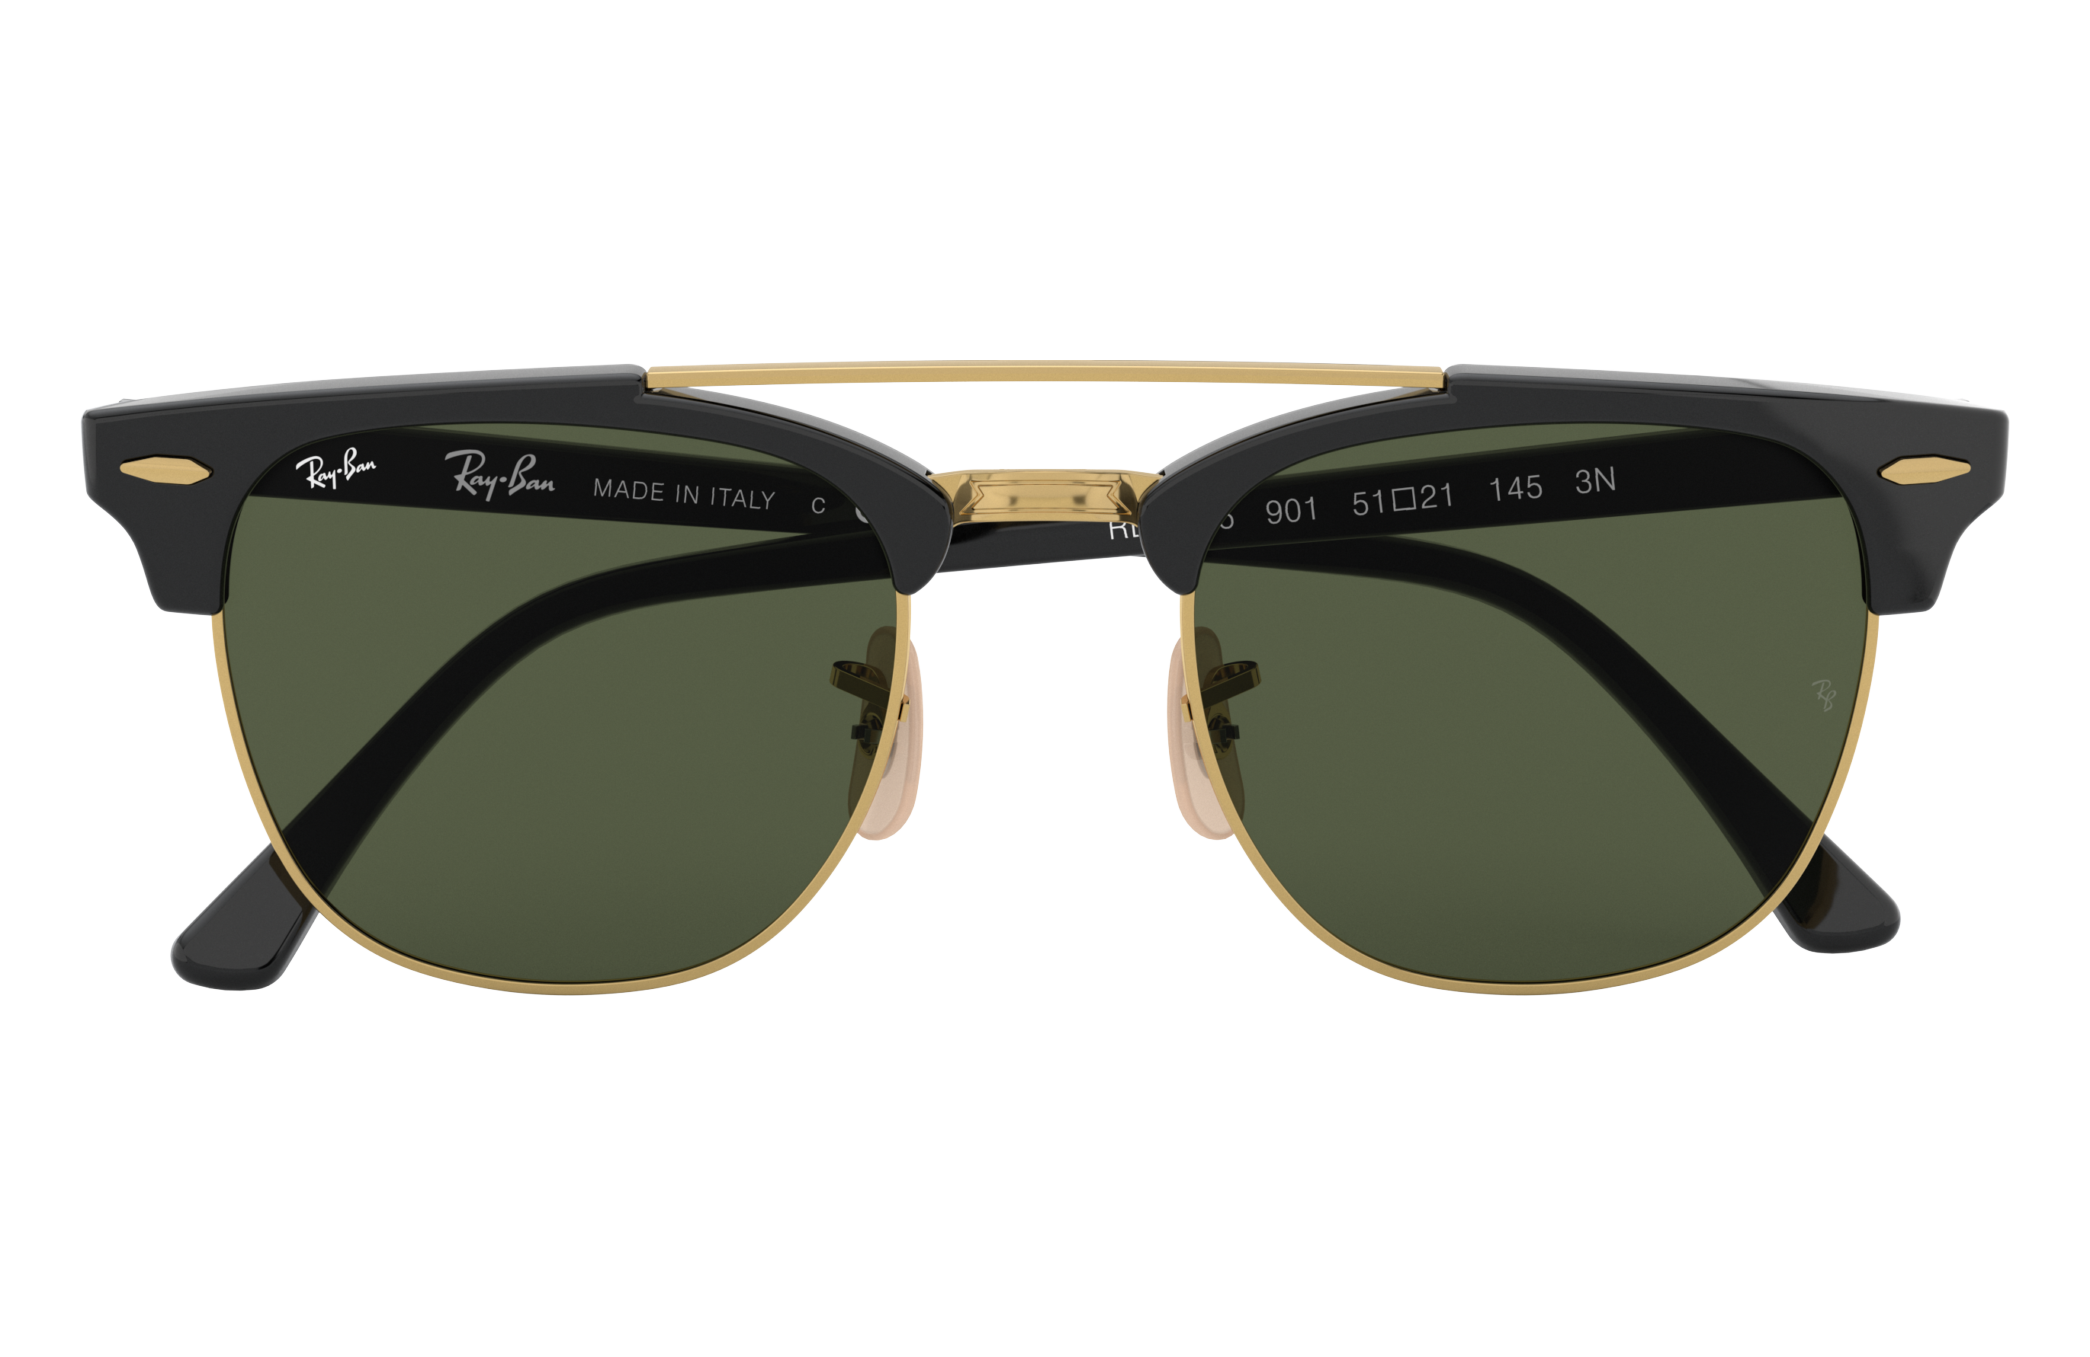 clubmaster double bridge sunglasses